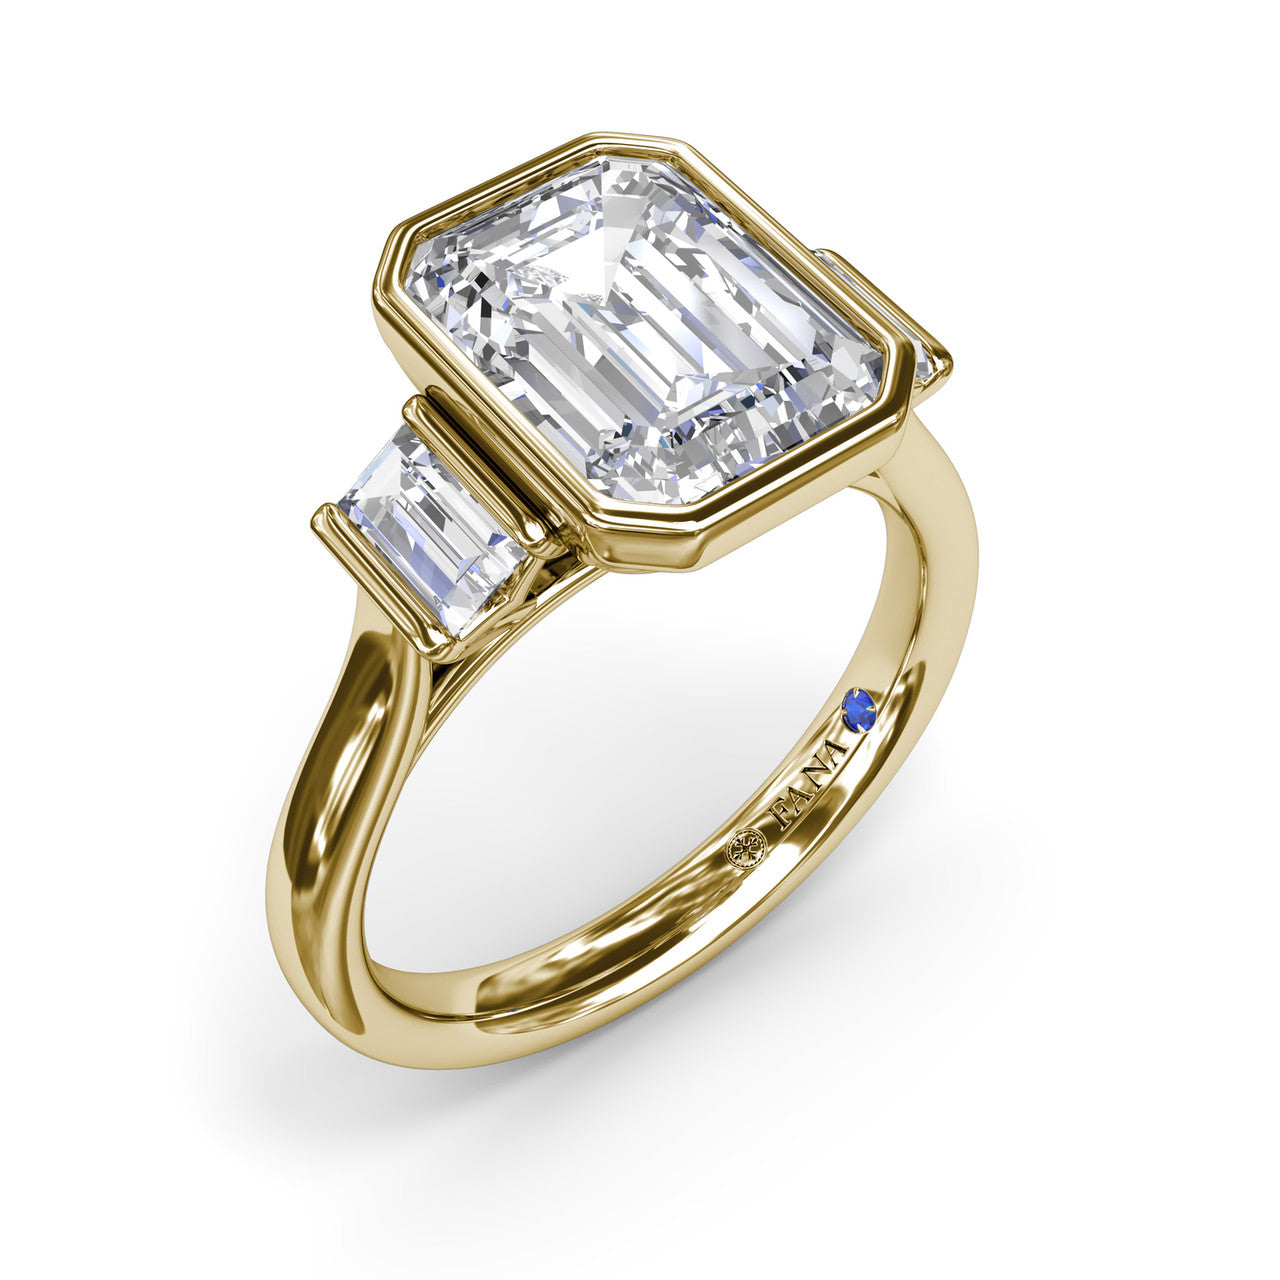 FANA Yellow Gold Emerald Cut Diamond Engagement Ring S4233/YG